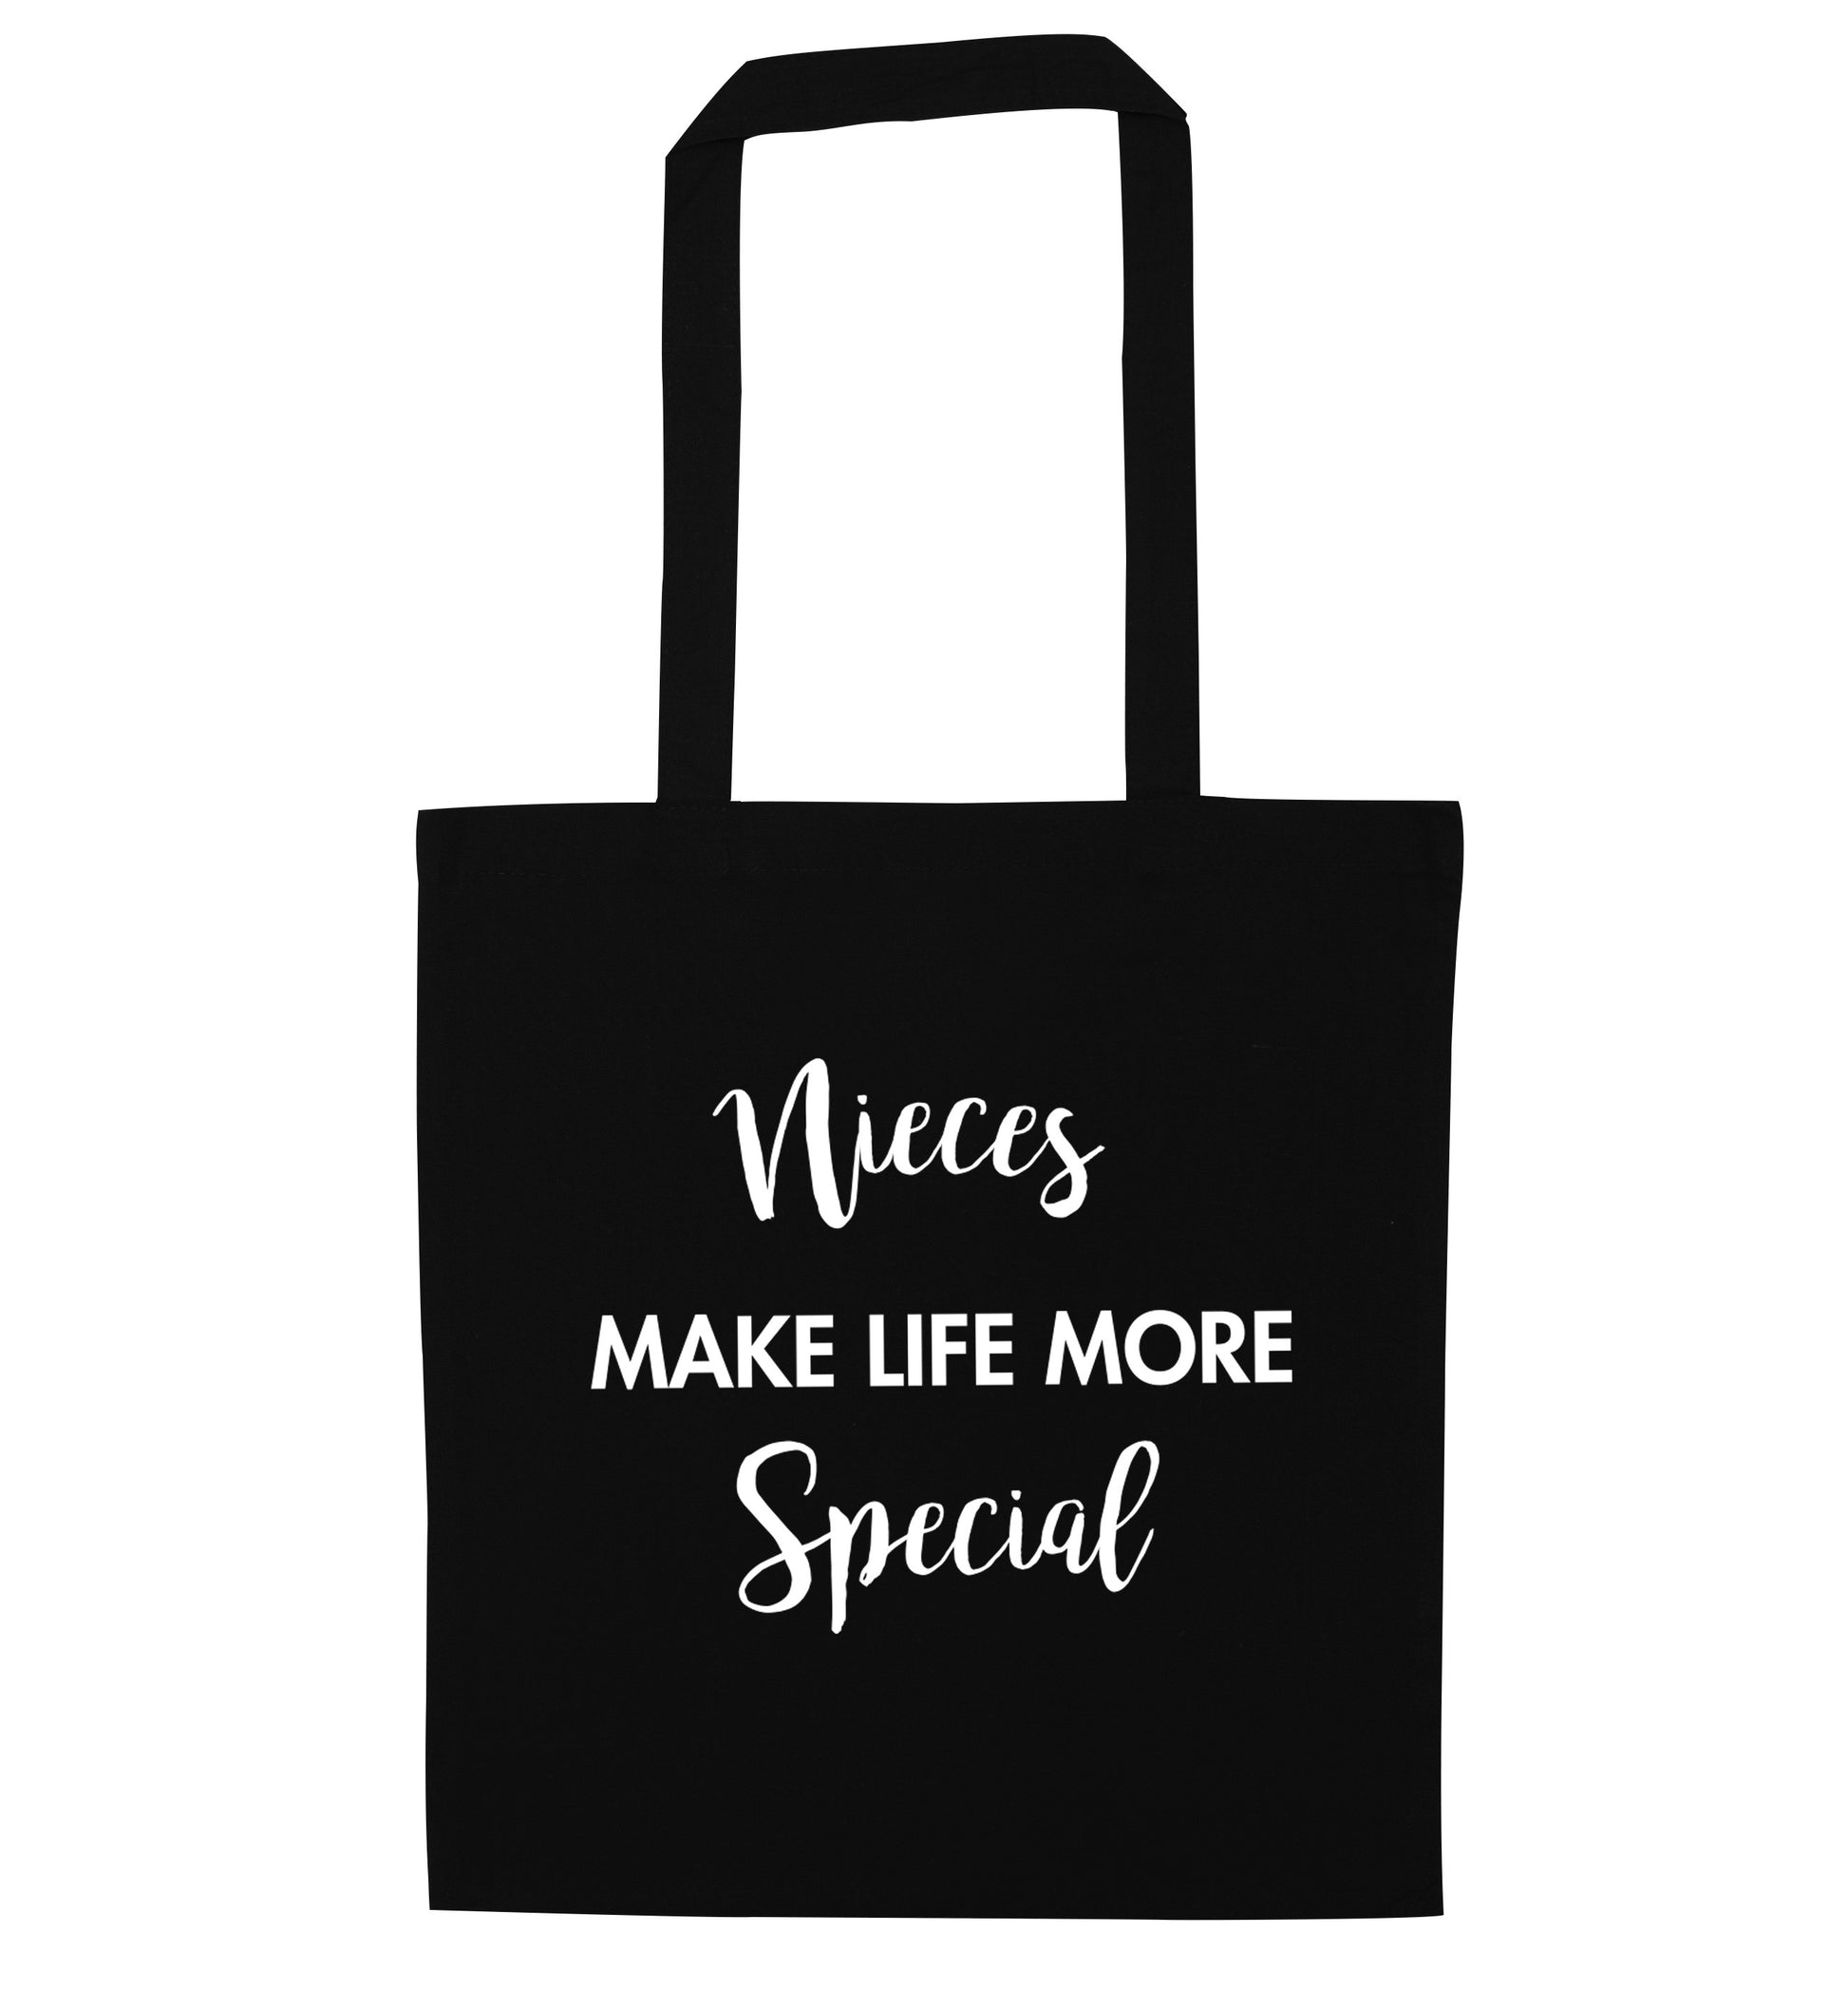 Nieces make life more special black tote bag